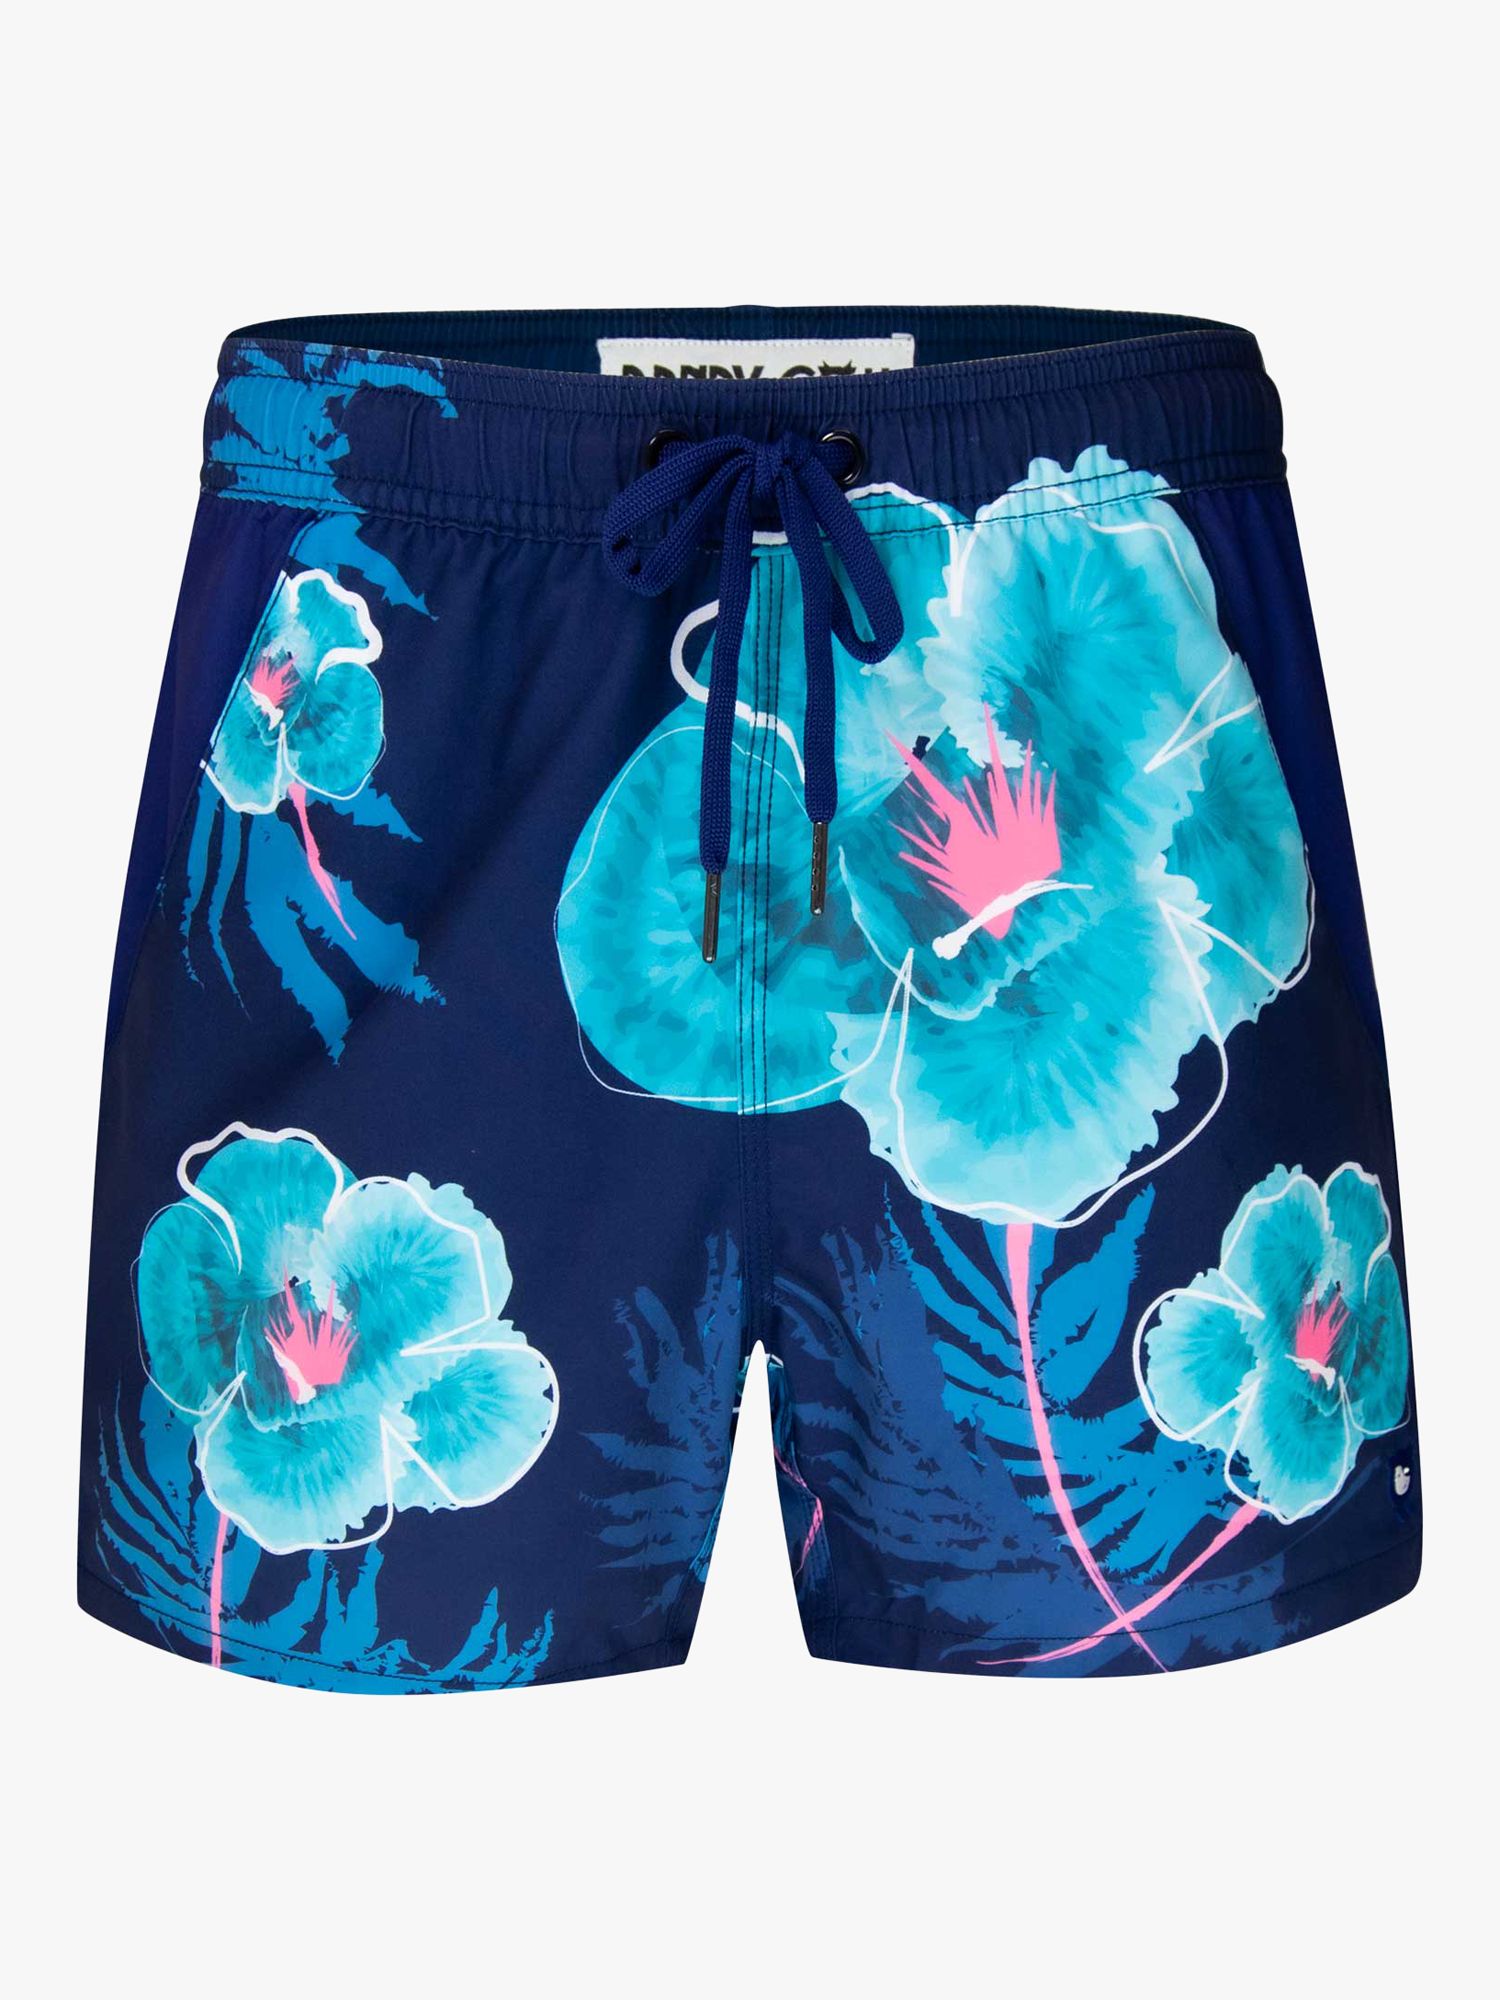 Randy Cow Floral Print Swim Shorts, Navy/Multi, L